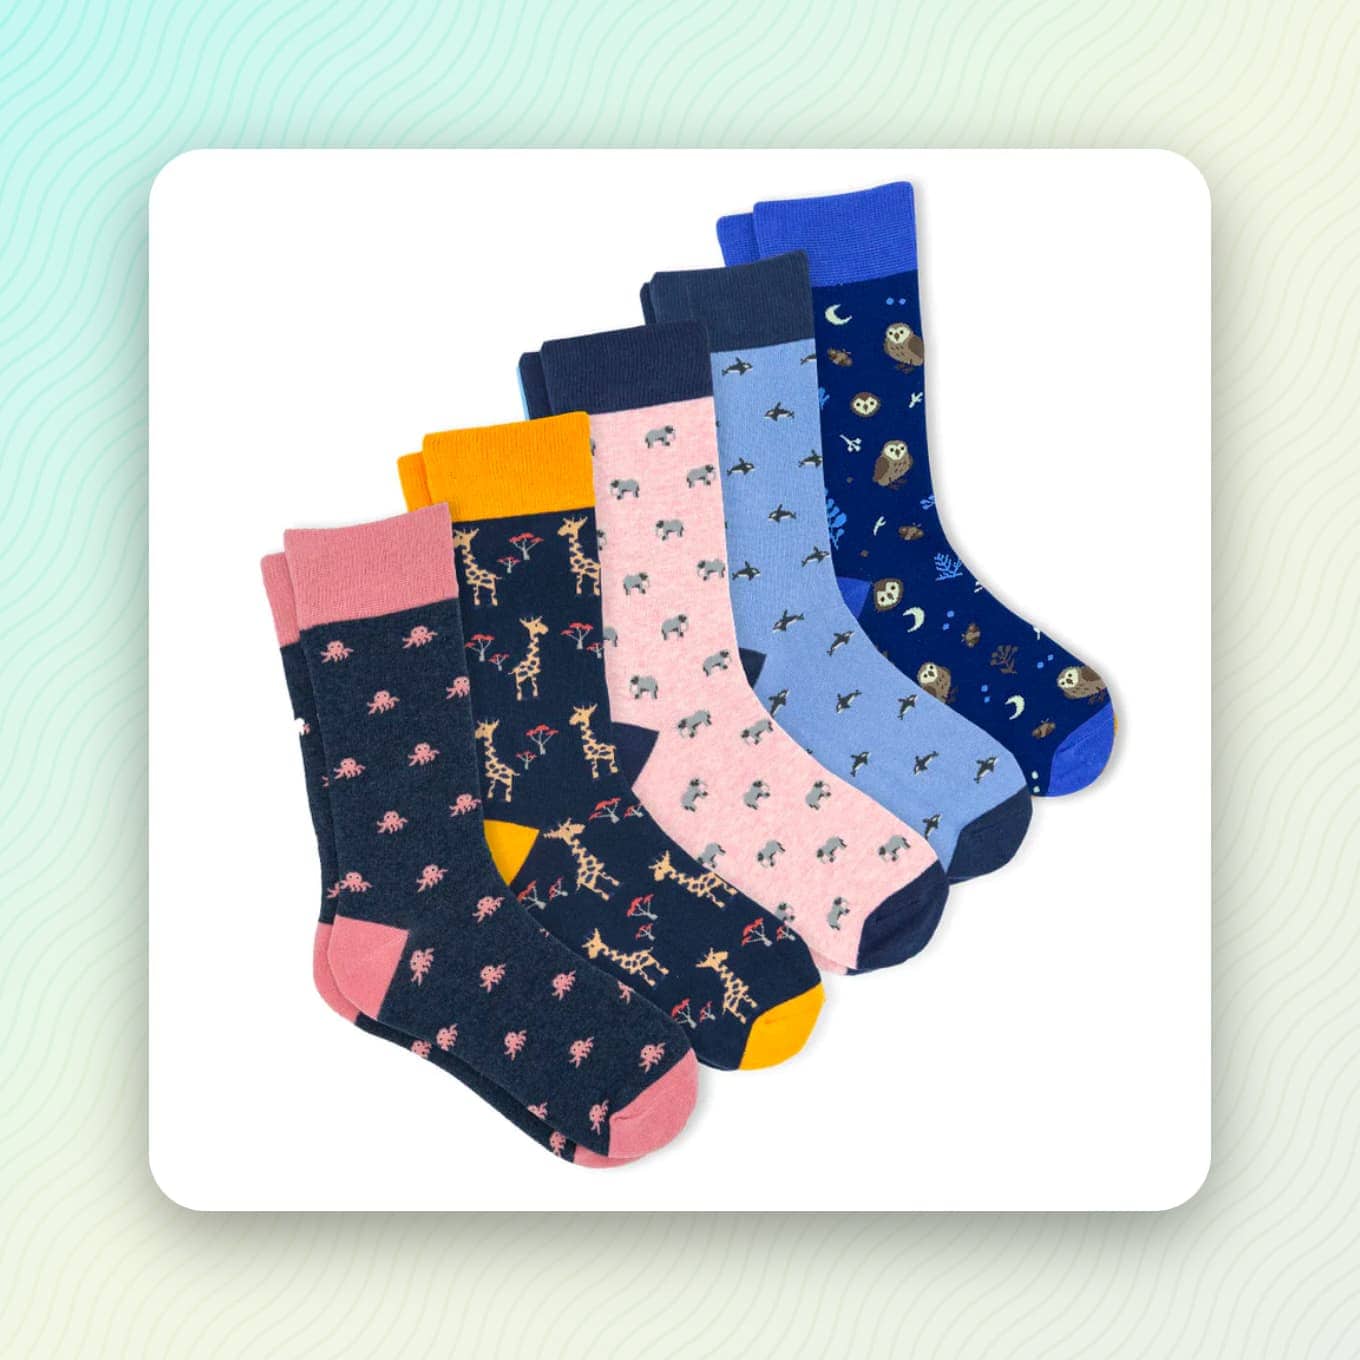 Socks covered in animals